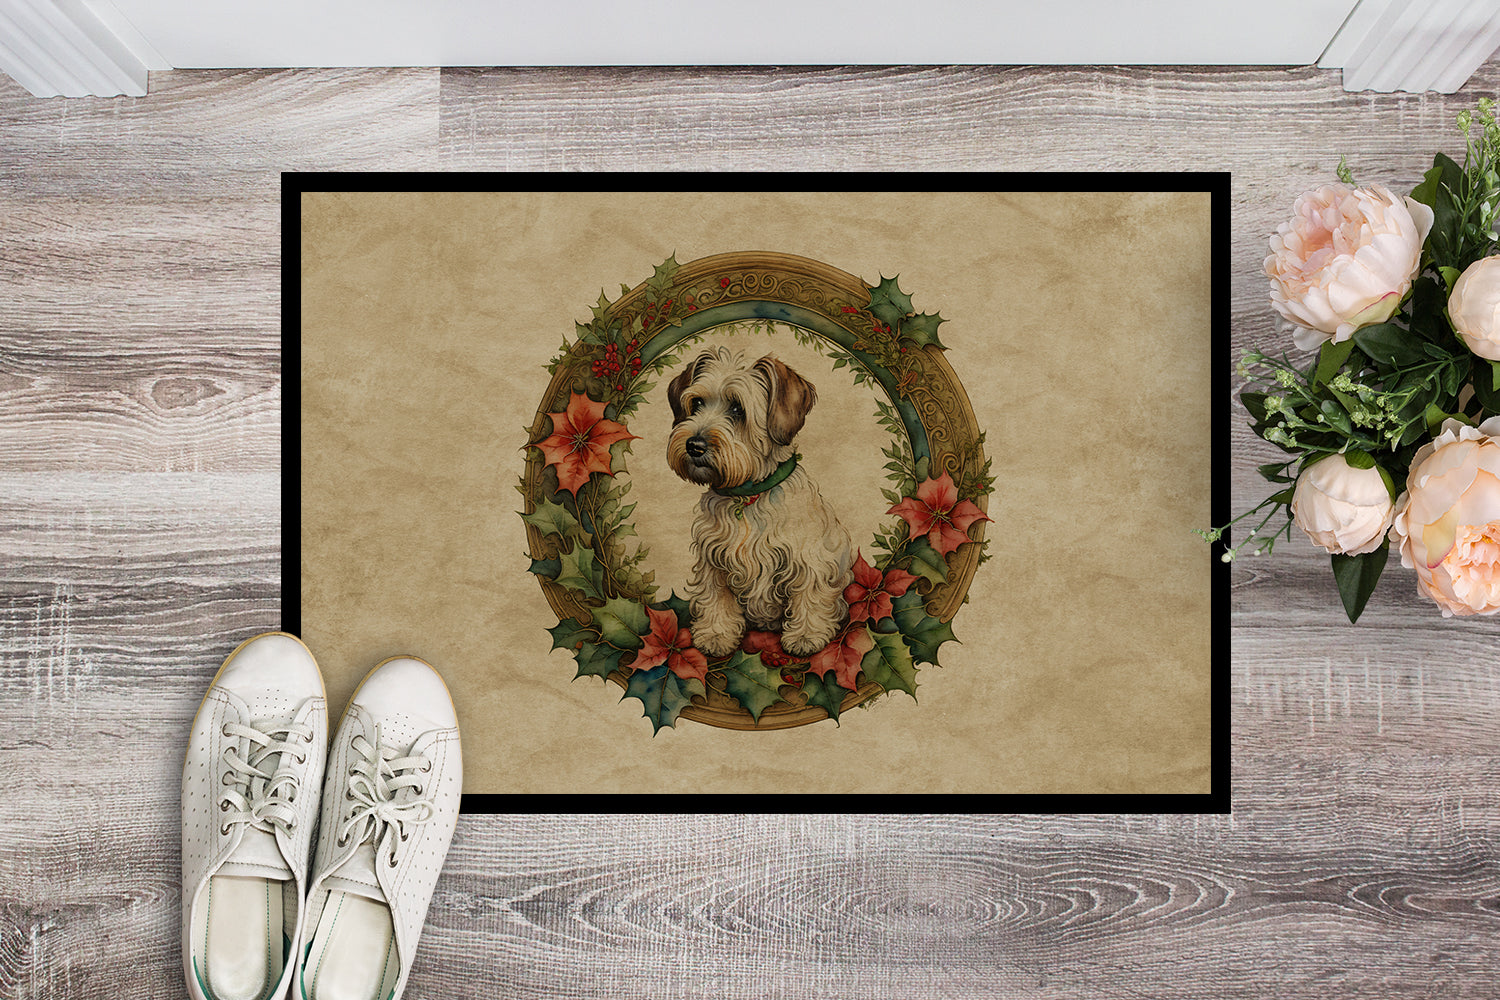 Buy this Sealyham Terrier Christmas Flowers Doormat